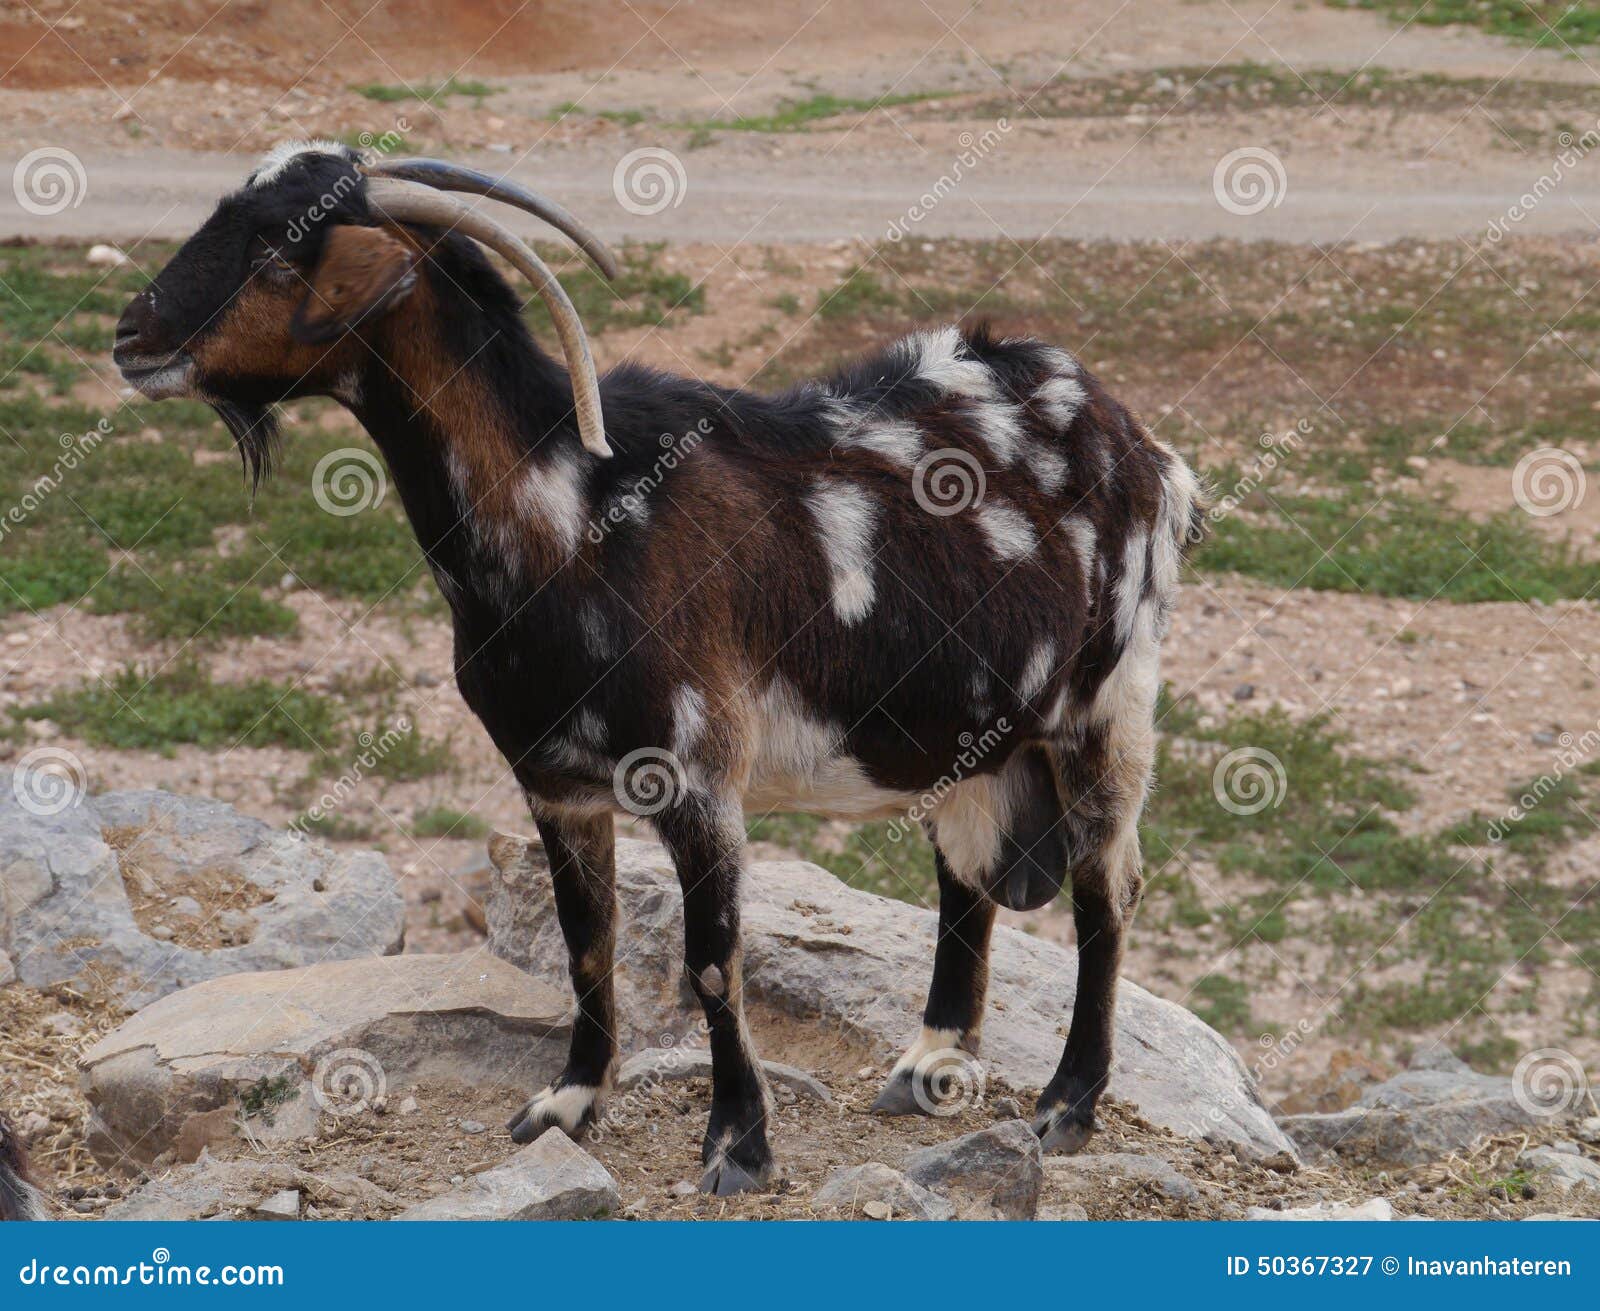 A Majorera Goat Native To Fuerteventura In Spain Stock Image - Image: 50367327